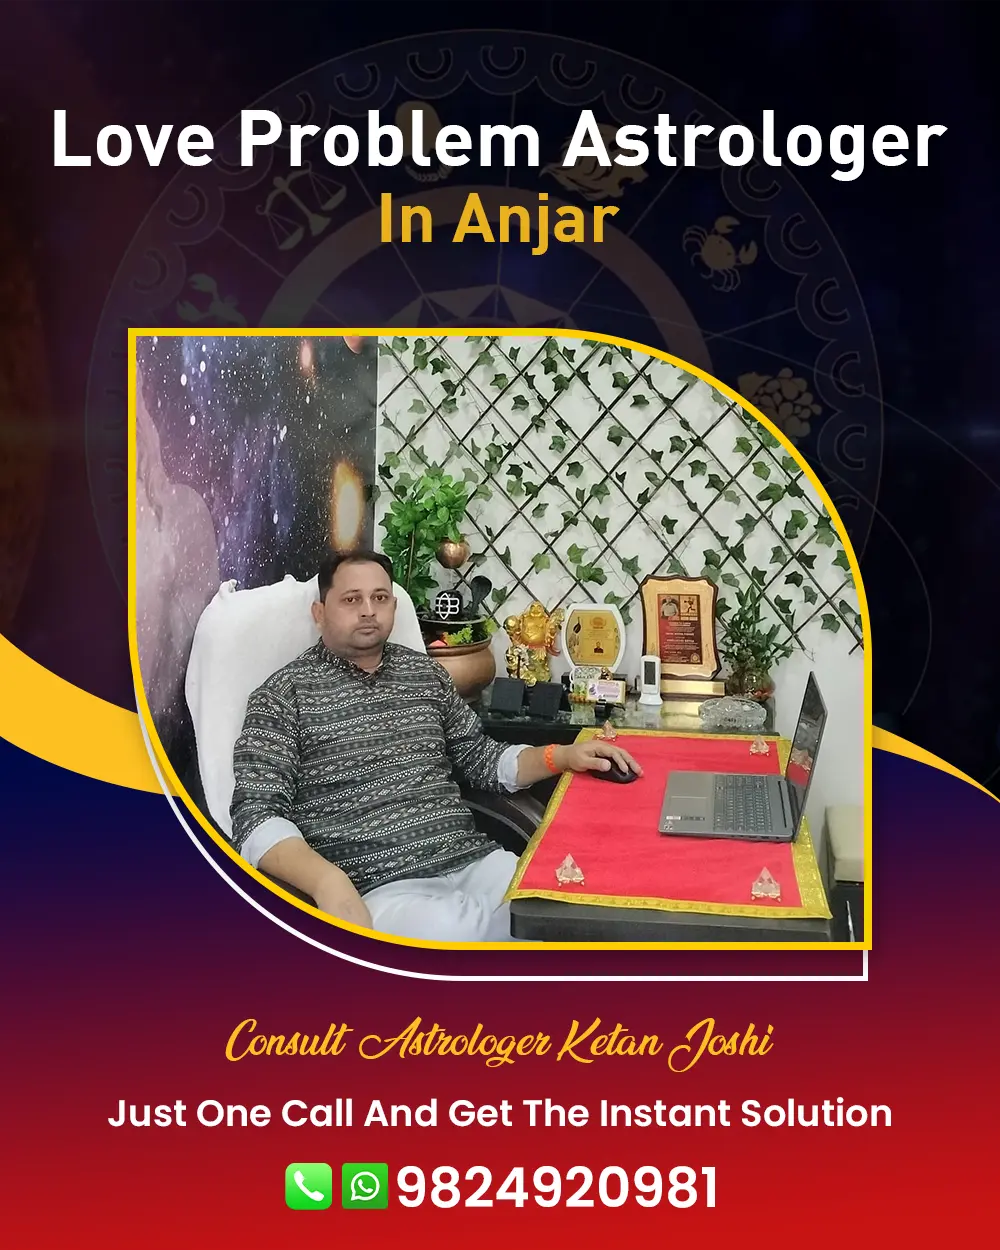 Love Problem Astrologer In Anjar